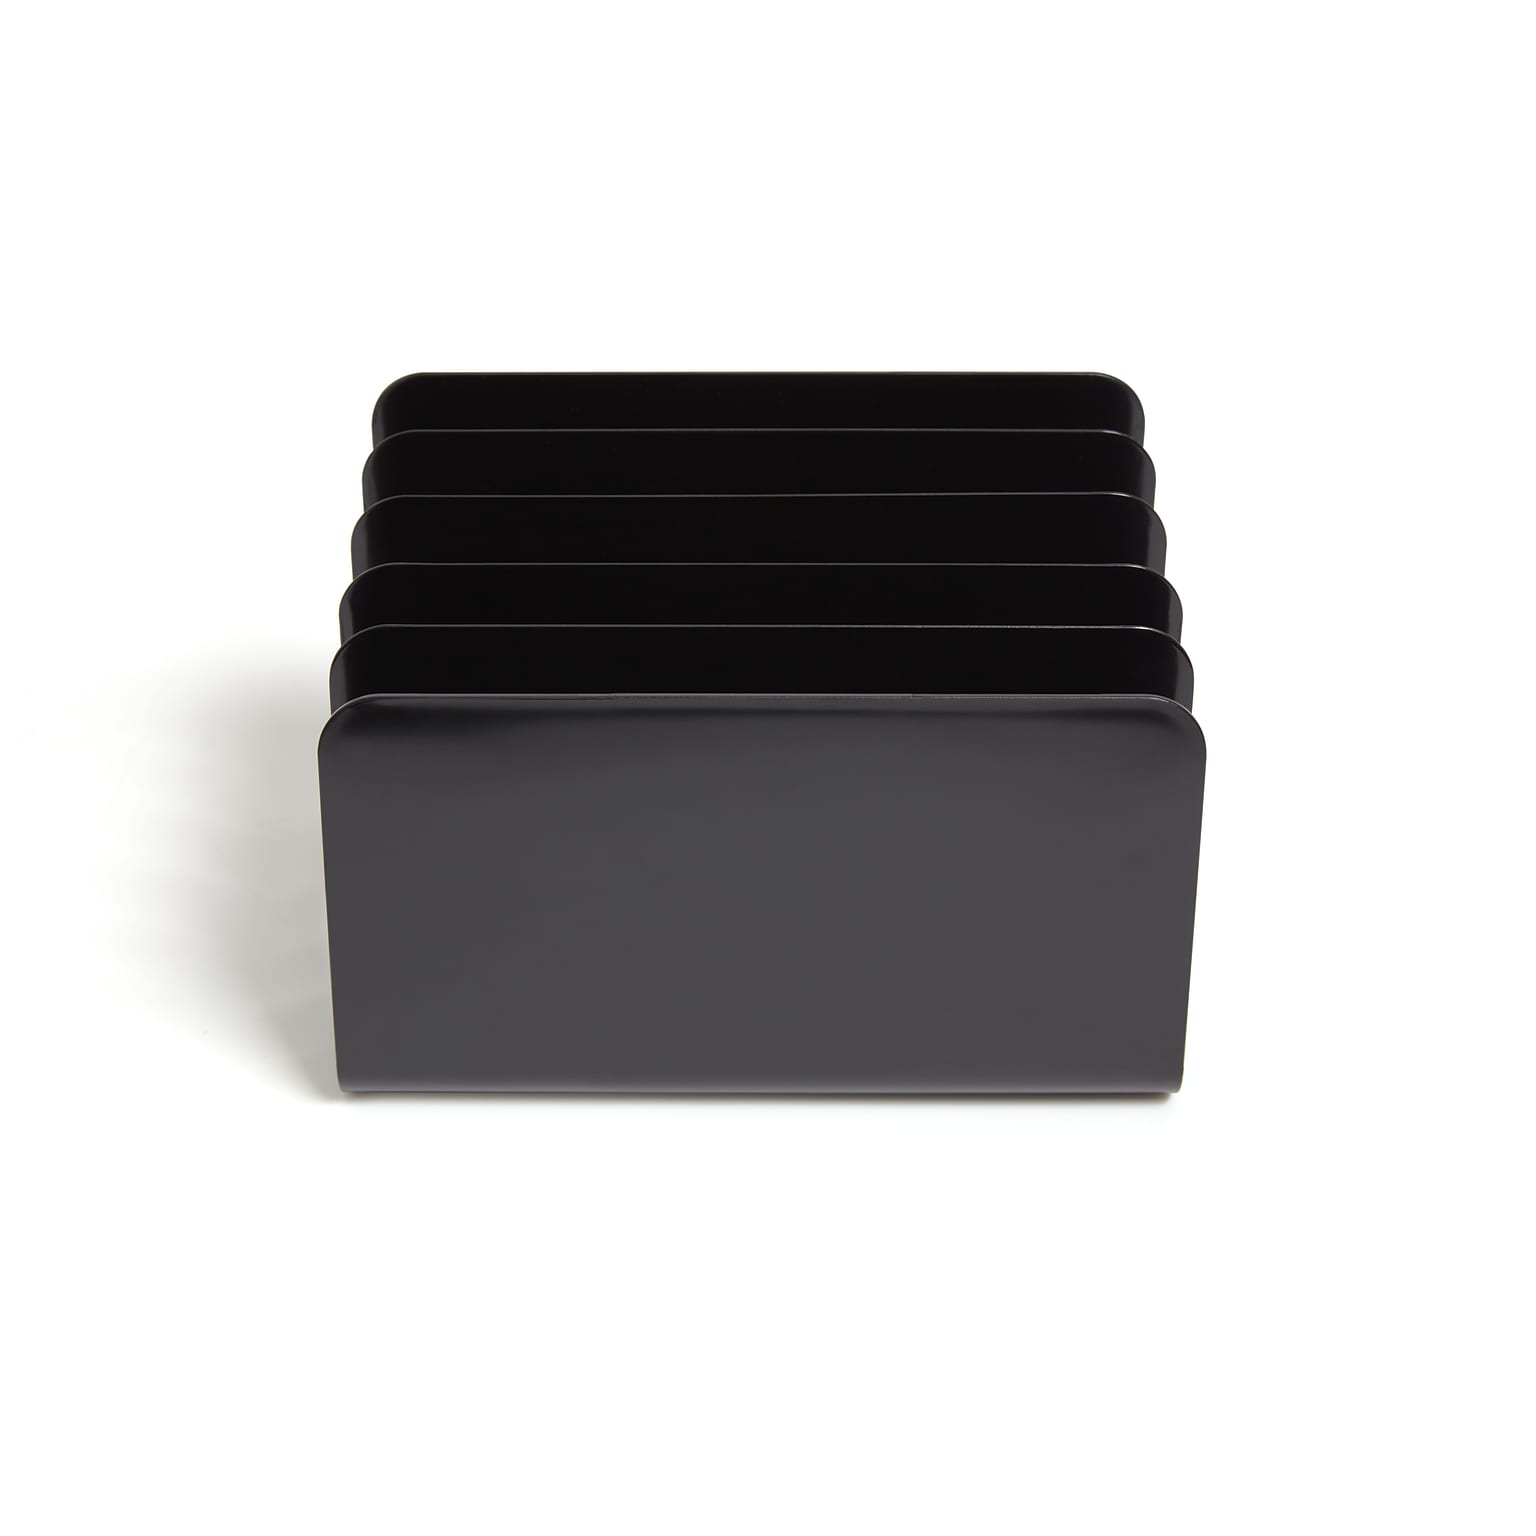 TRU RED™ 5-Compartment Plastic Incline Sorter, Black (TR55335)